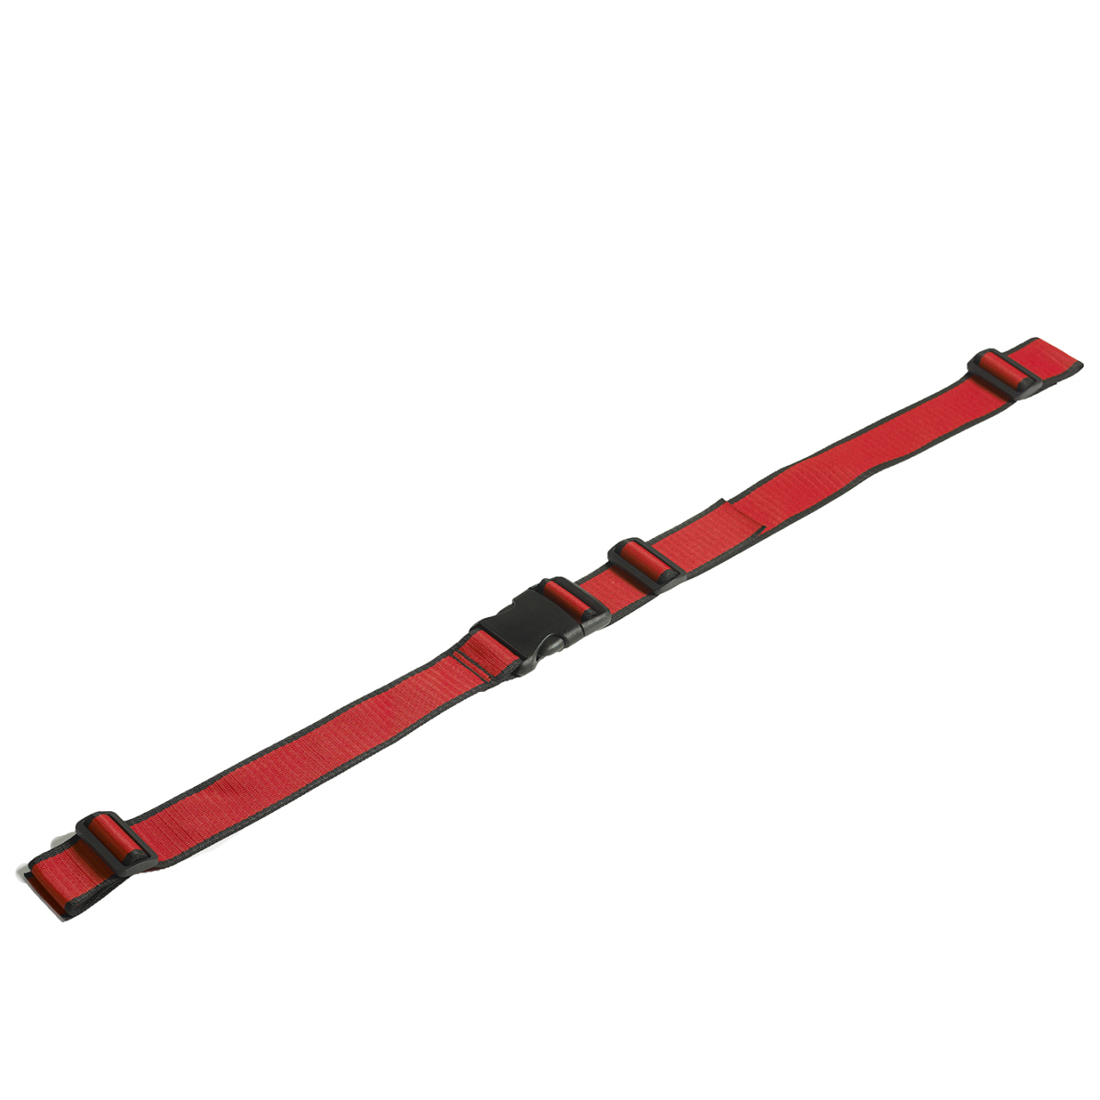 Molift-Stretcher-safety-belts_550268.jpg